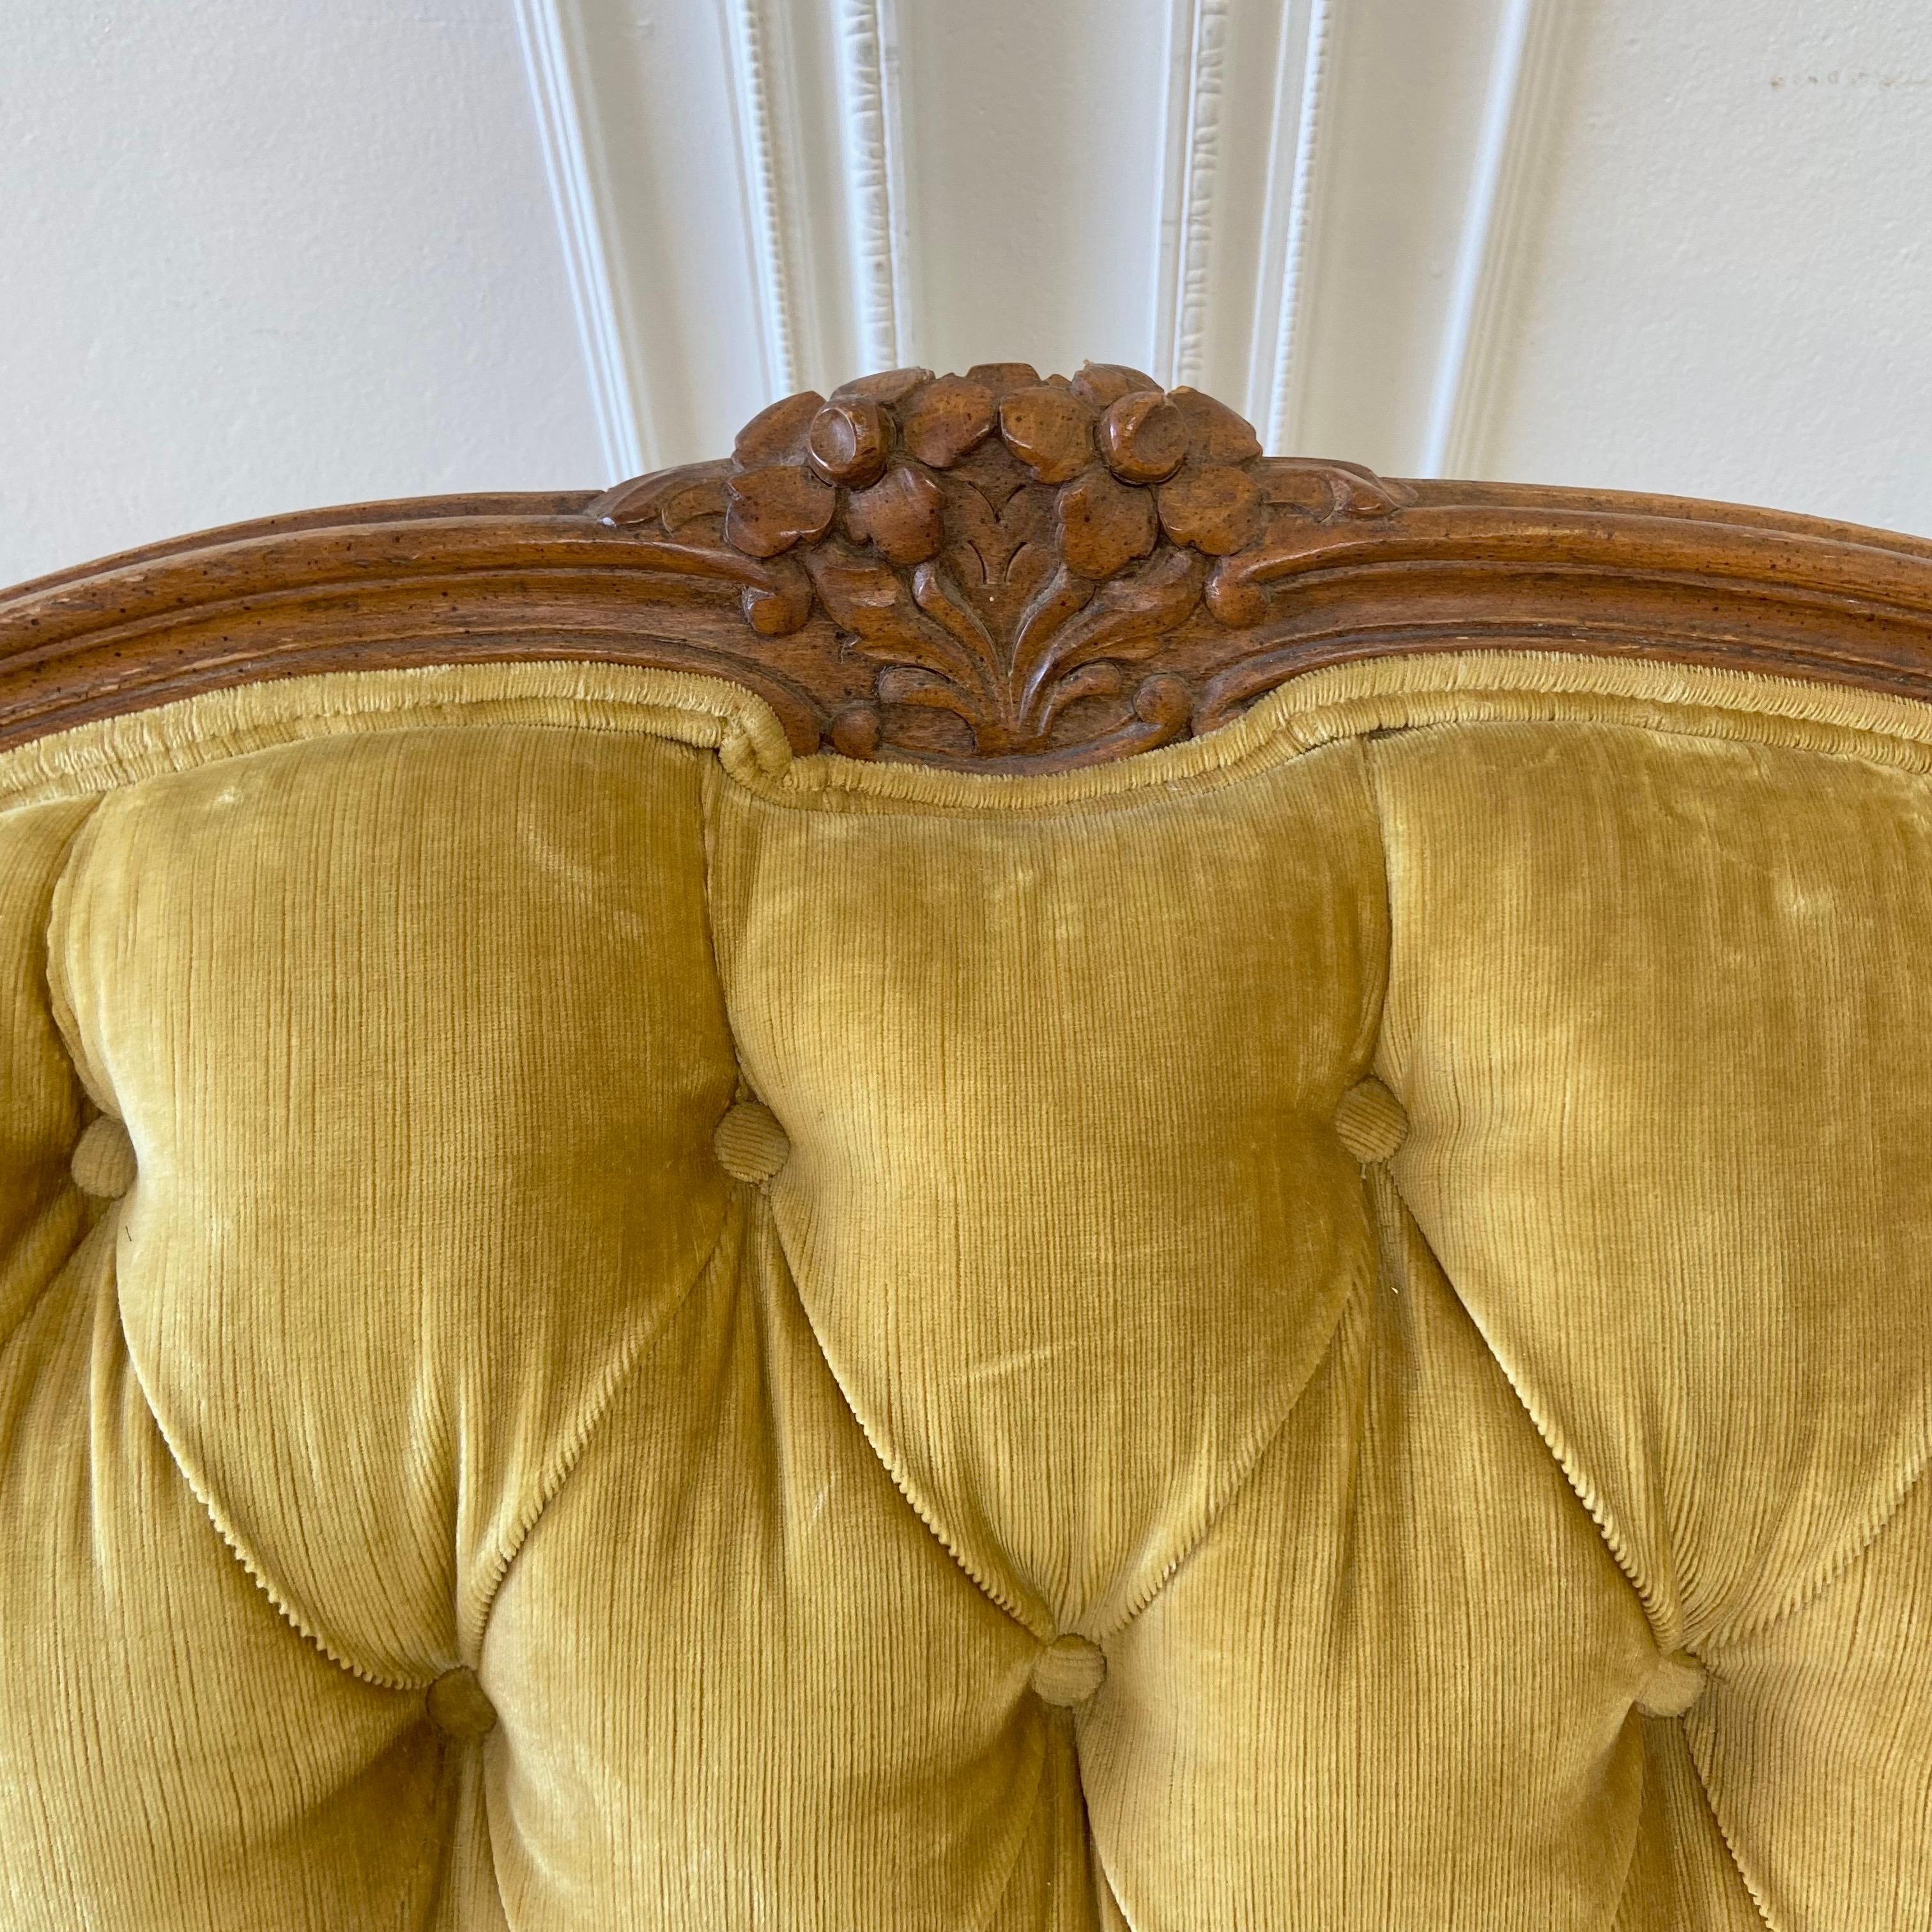 vintage french sofa